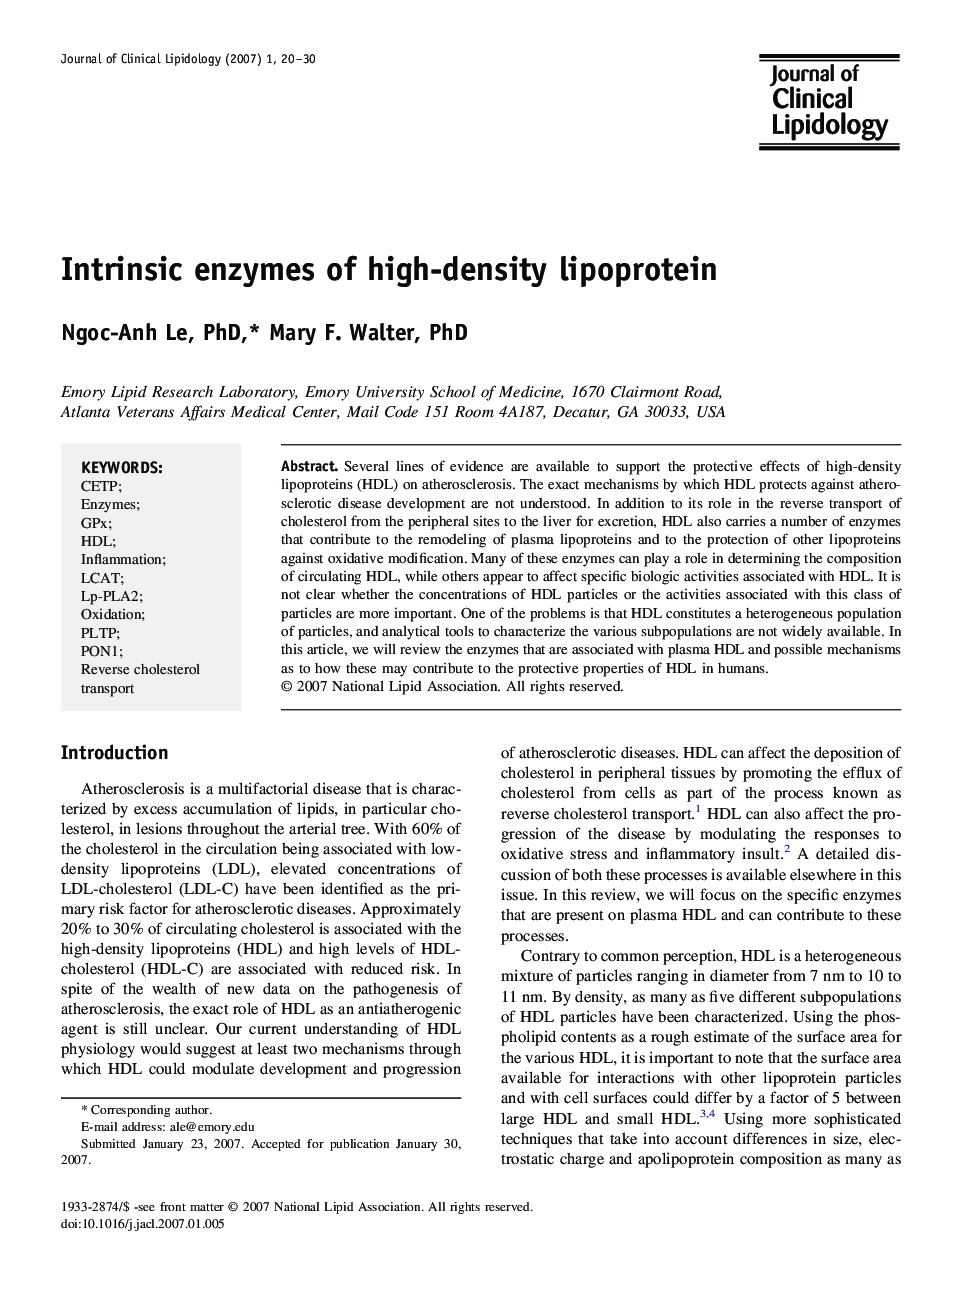 Intrinsic enzymes of high-density lipoprotein